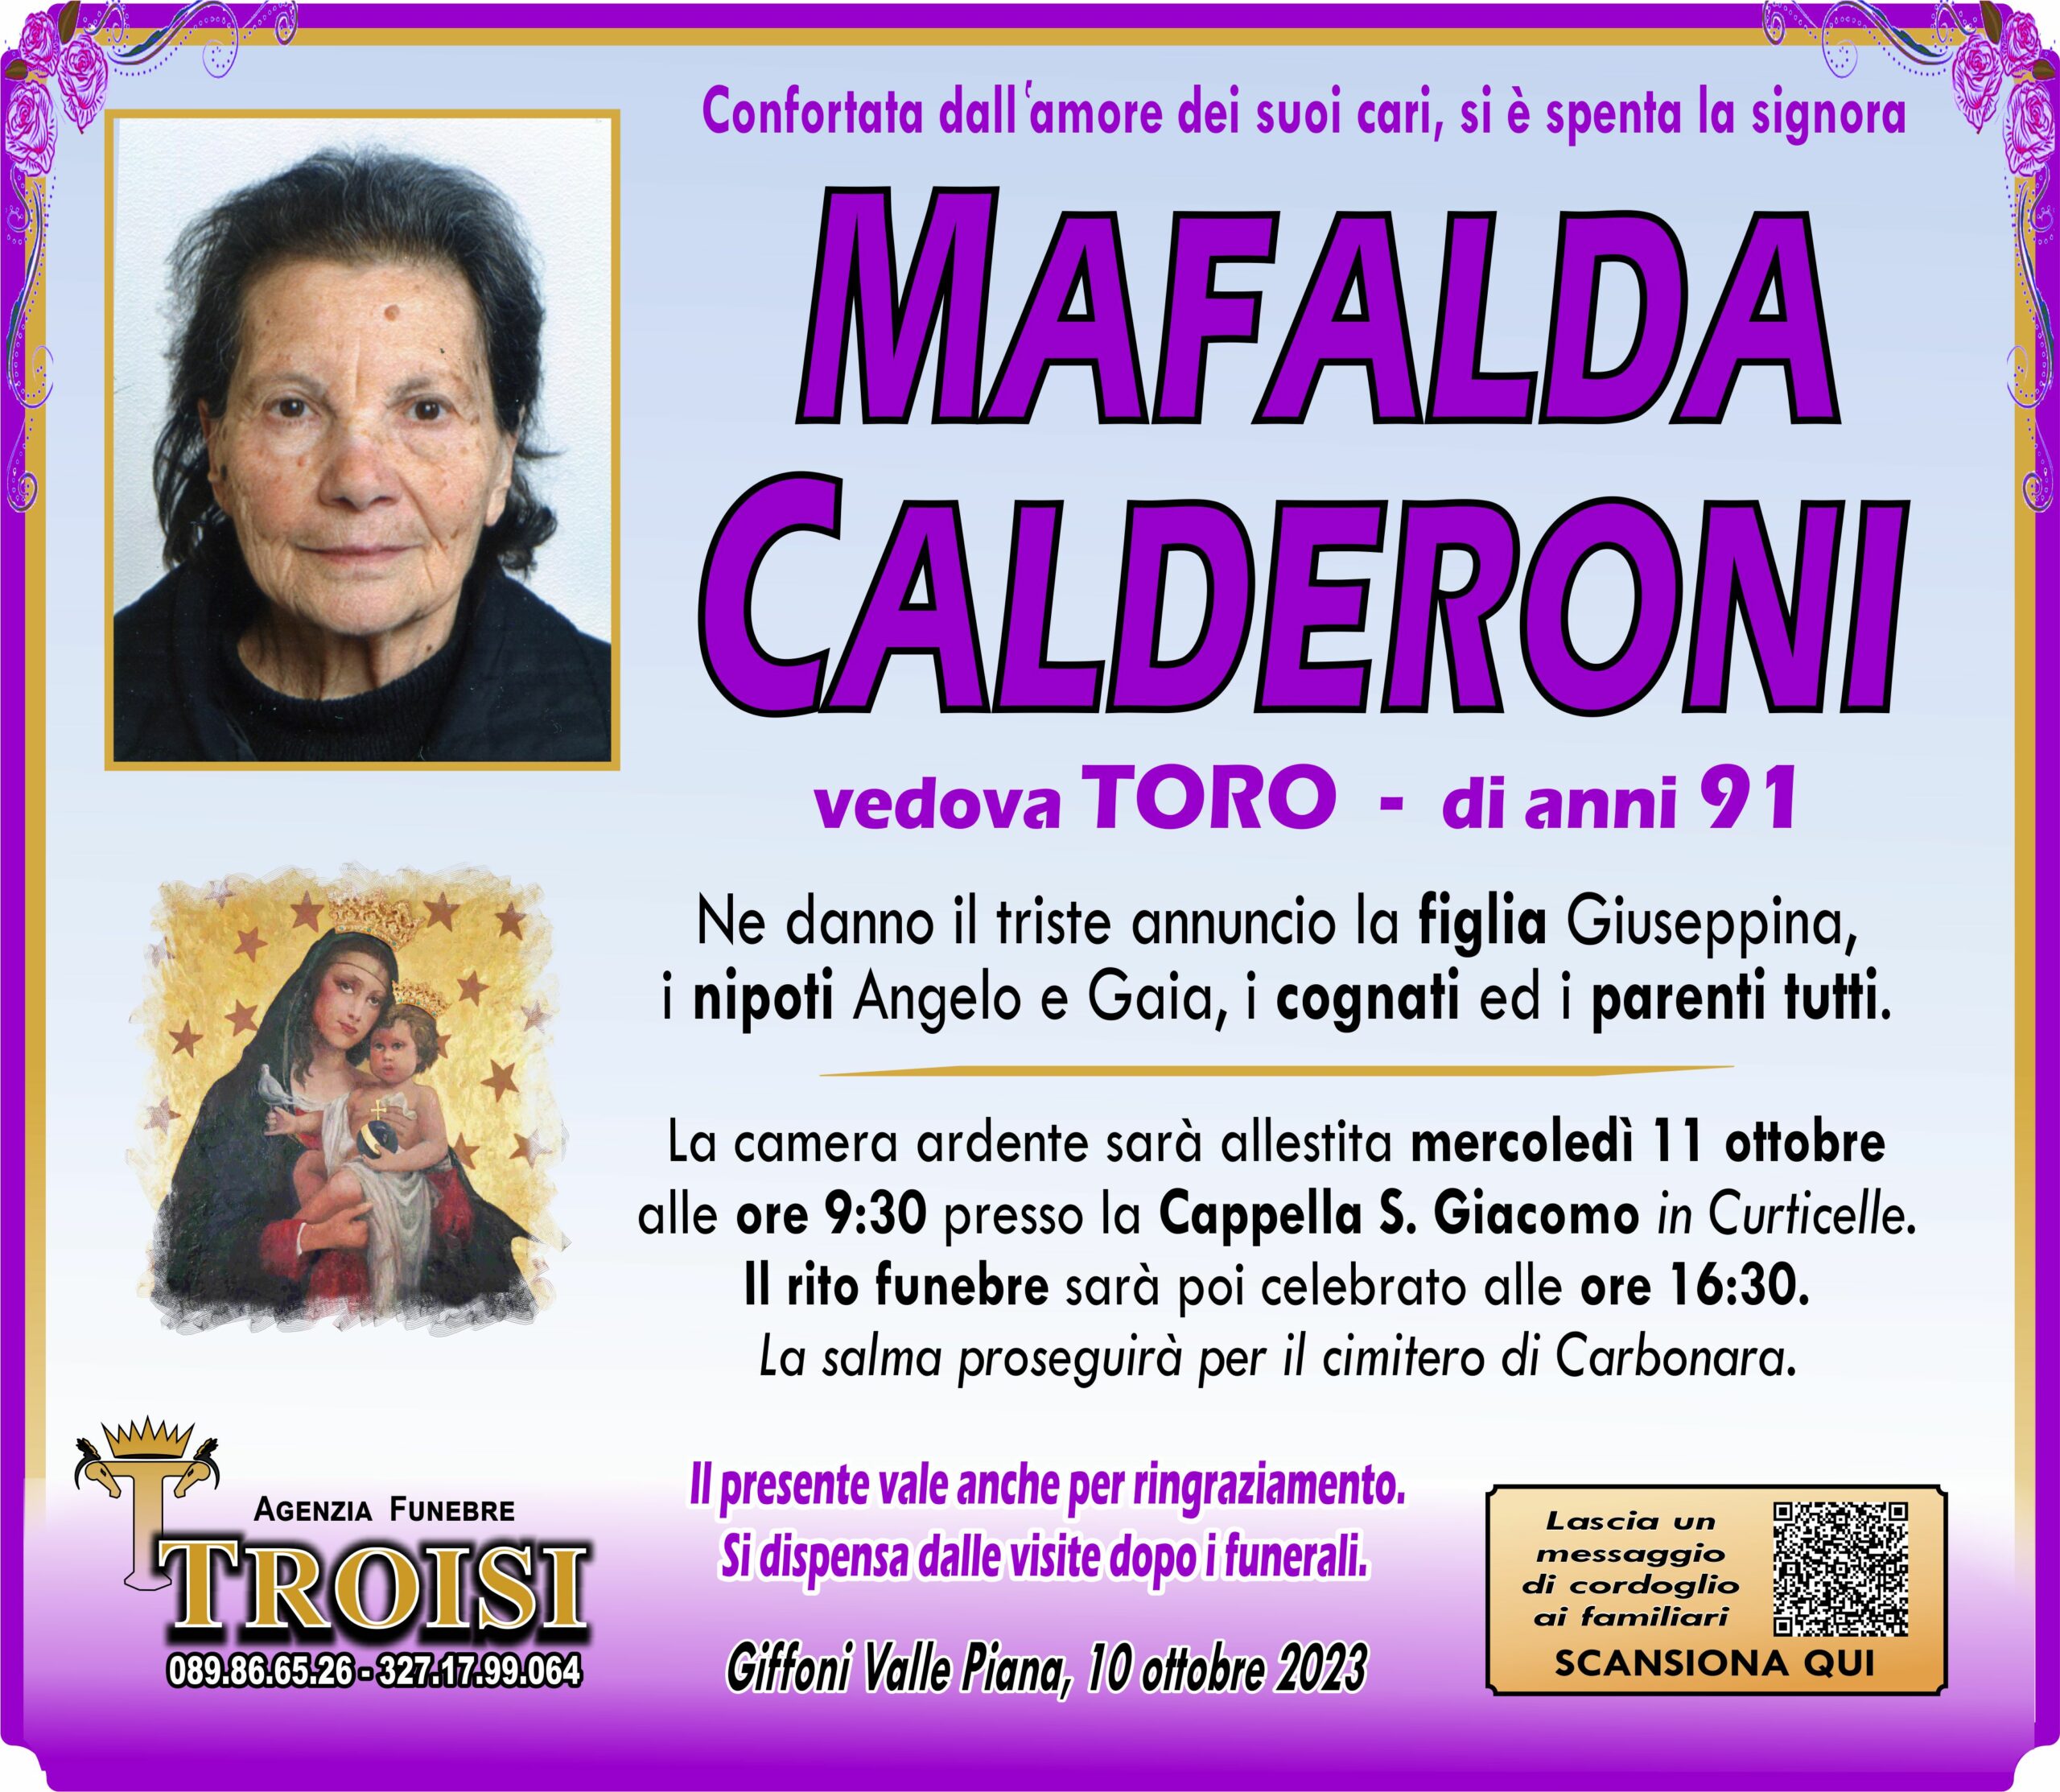 MAFALDA CALDERONI